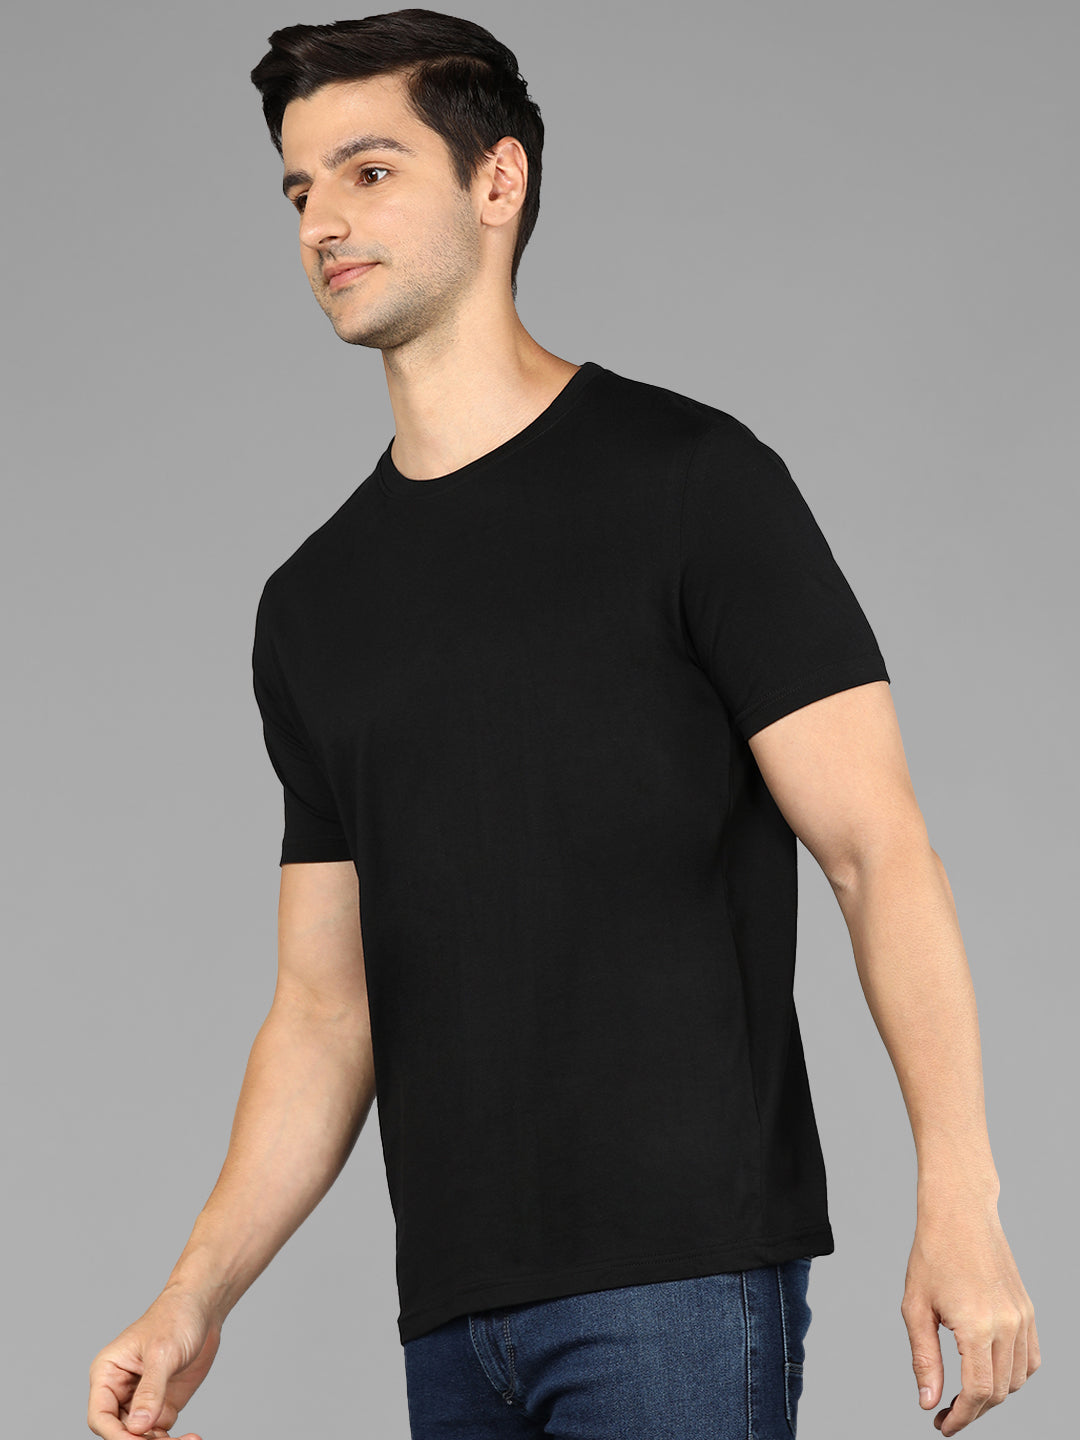 Joe Wick - Solid Men's T-Shirt - Black